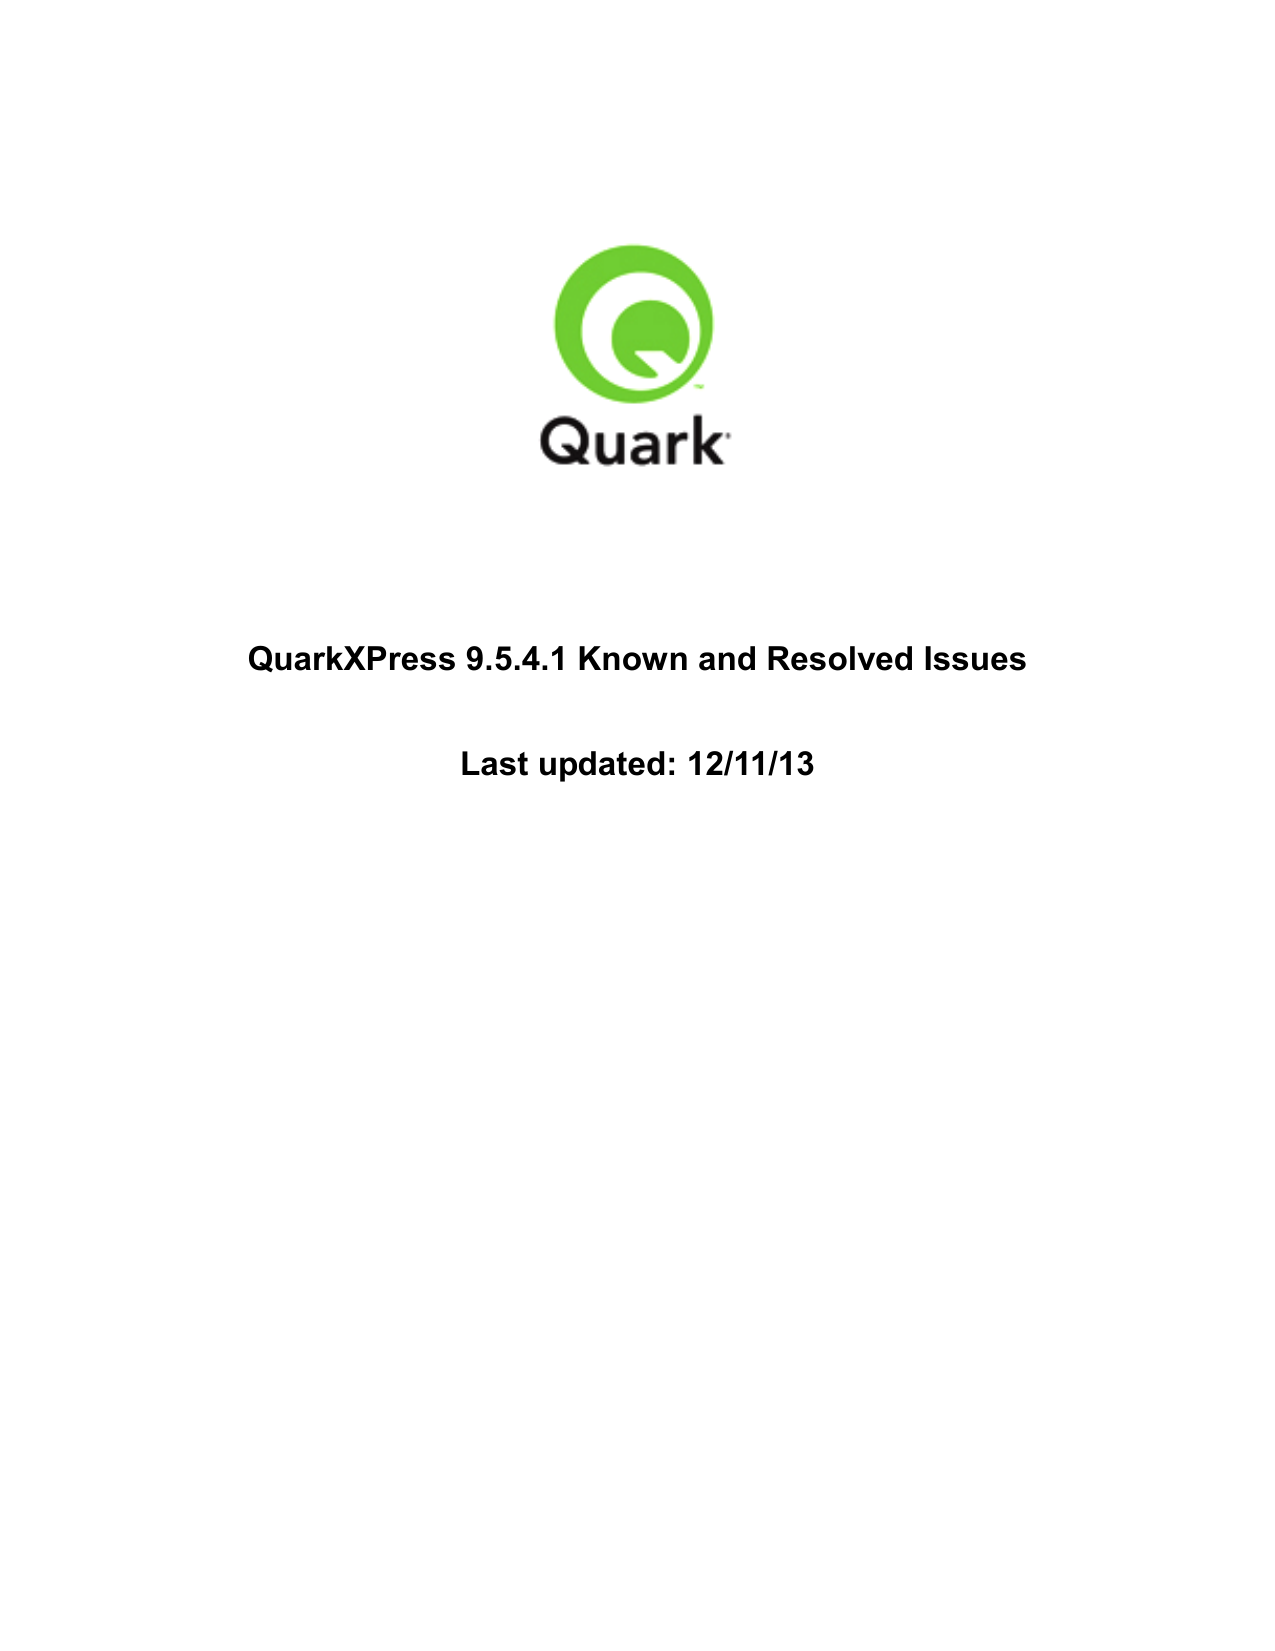 quarkxpress 2015 no cmyk profile embedded